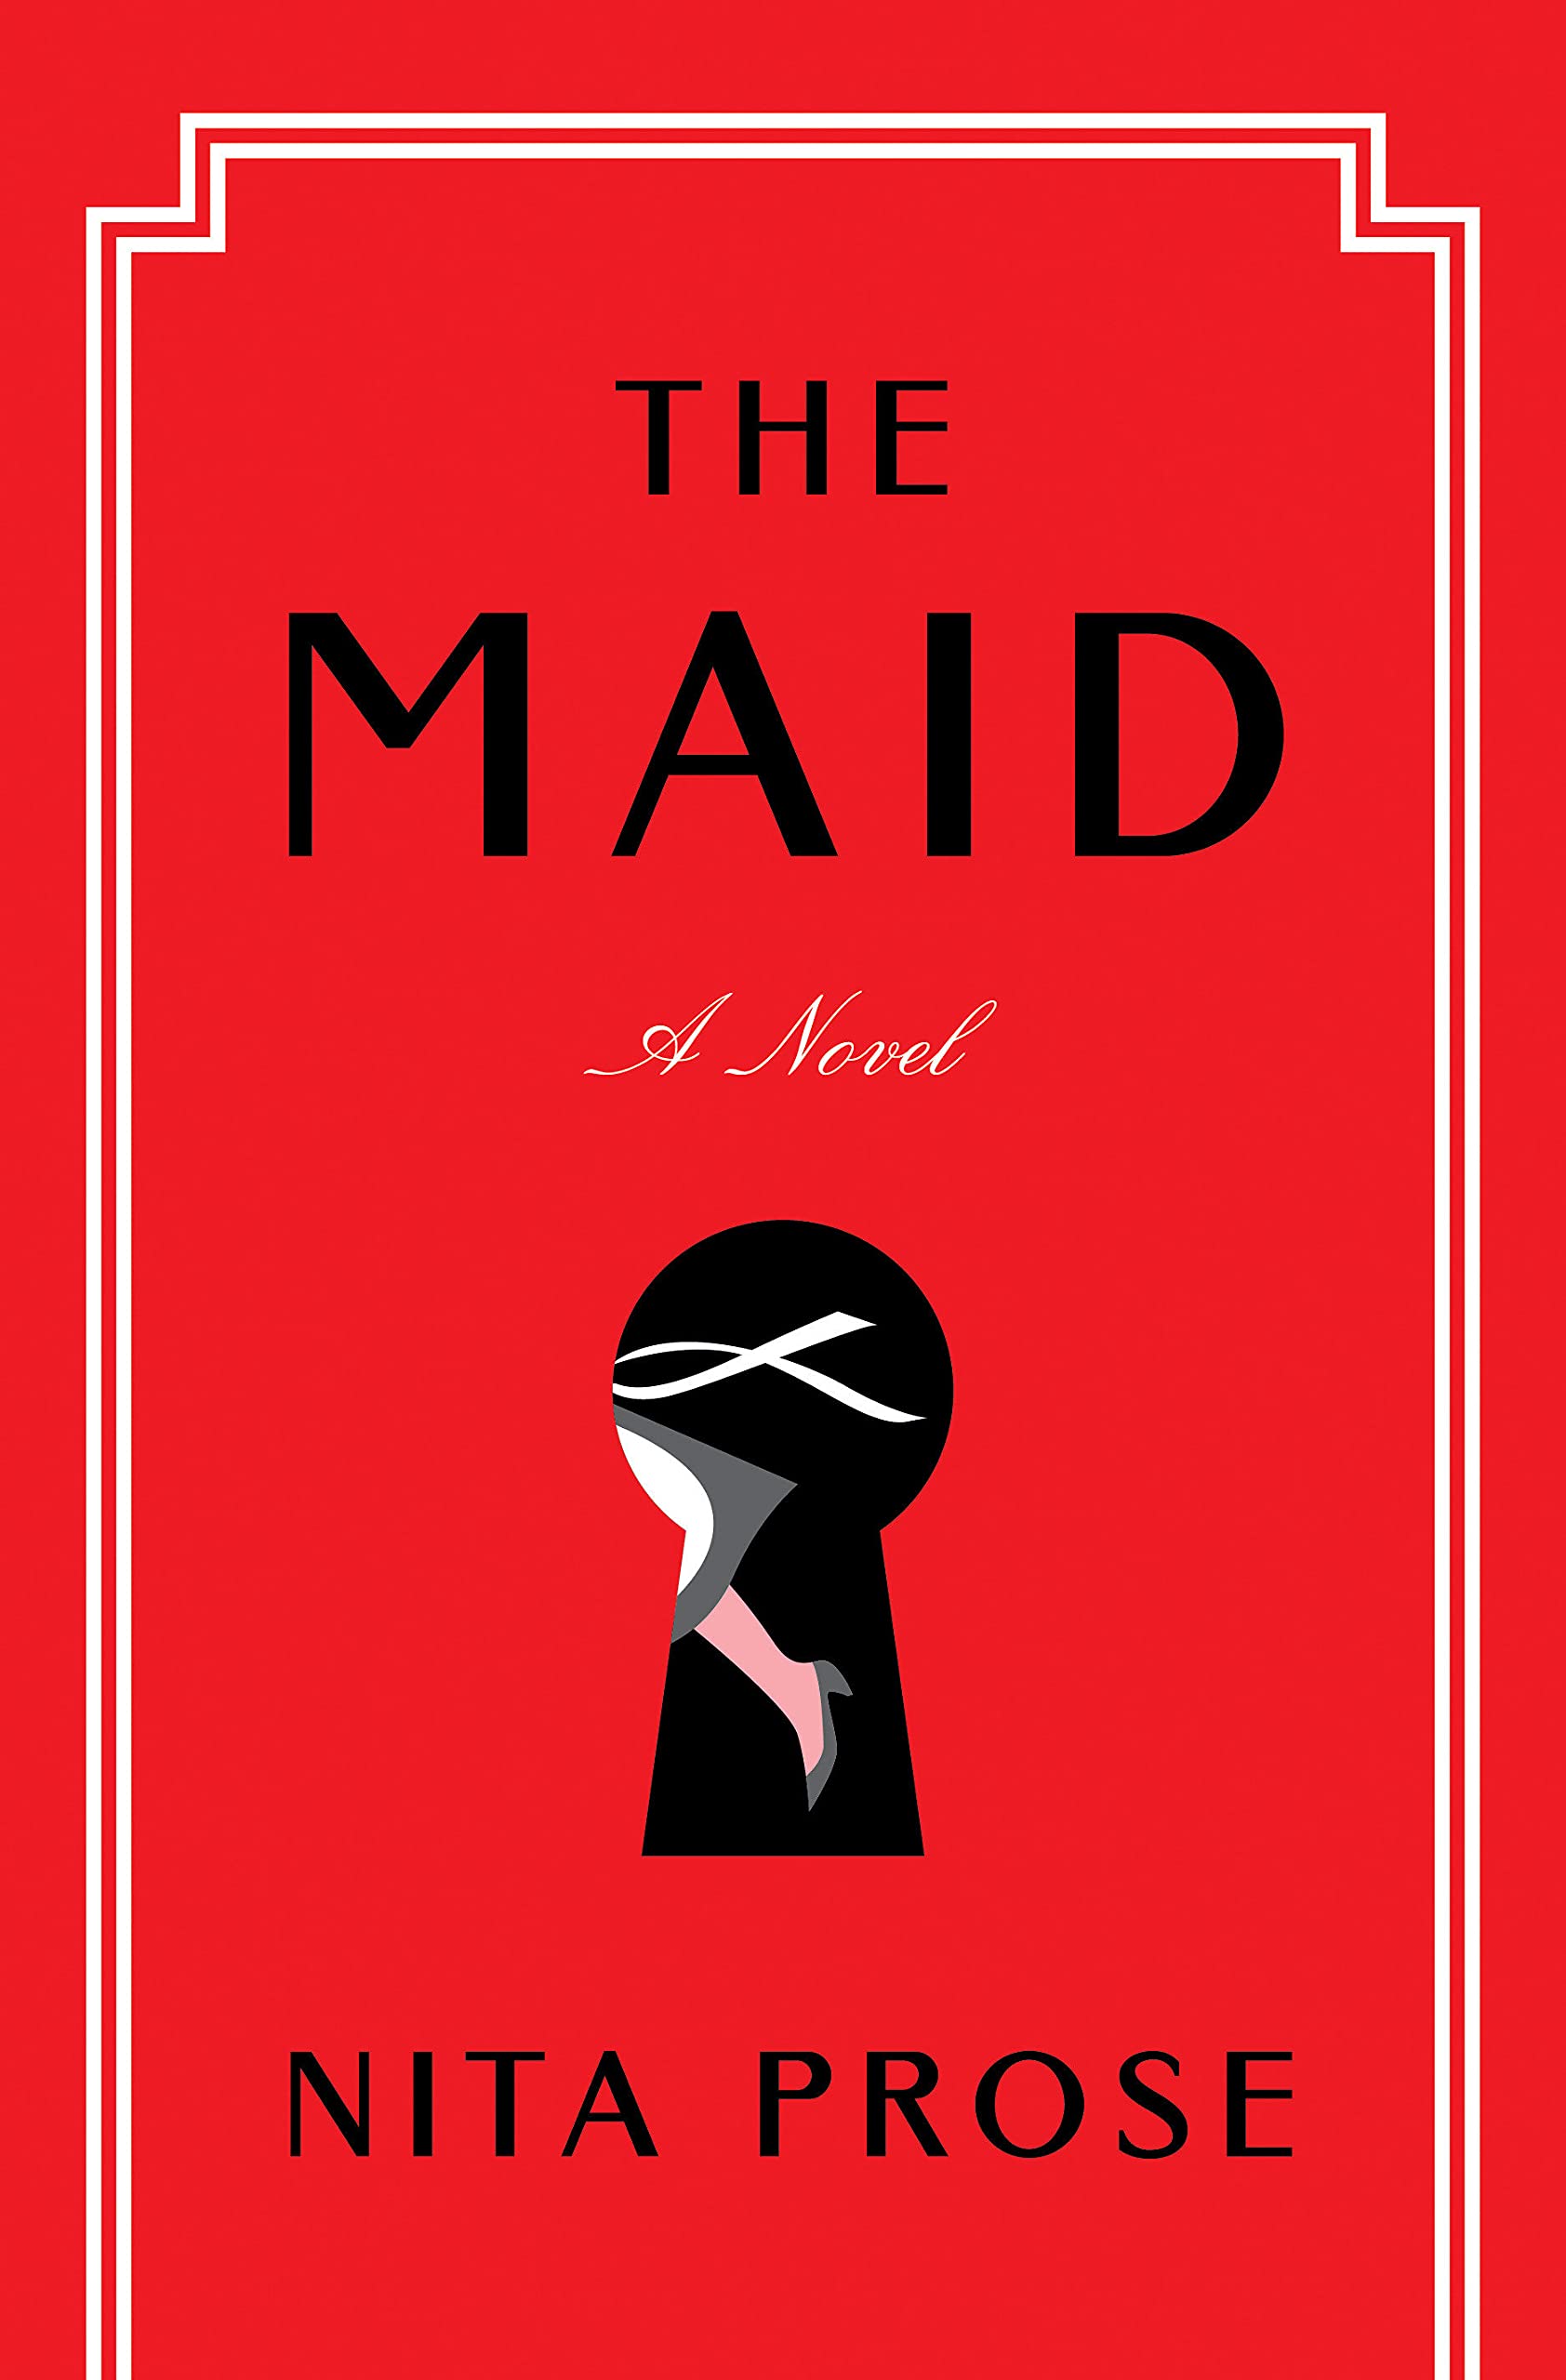 The Maid: A Novel Paperback by Nita Prose